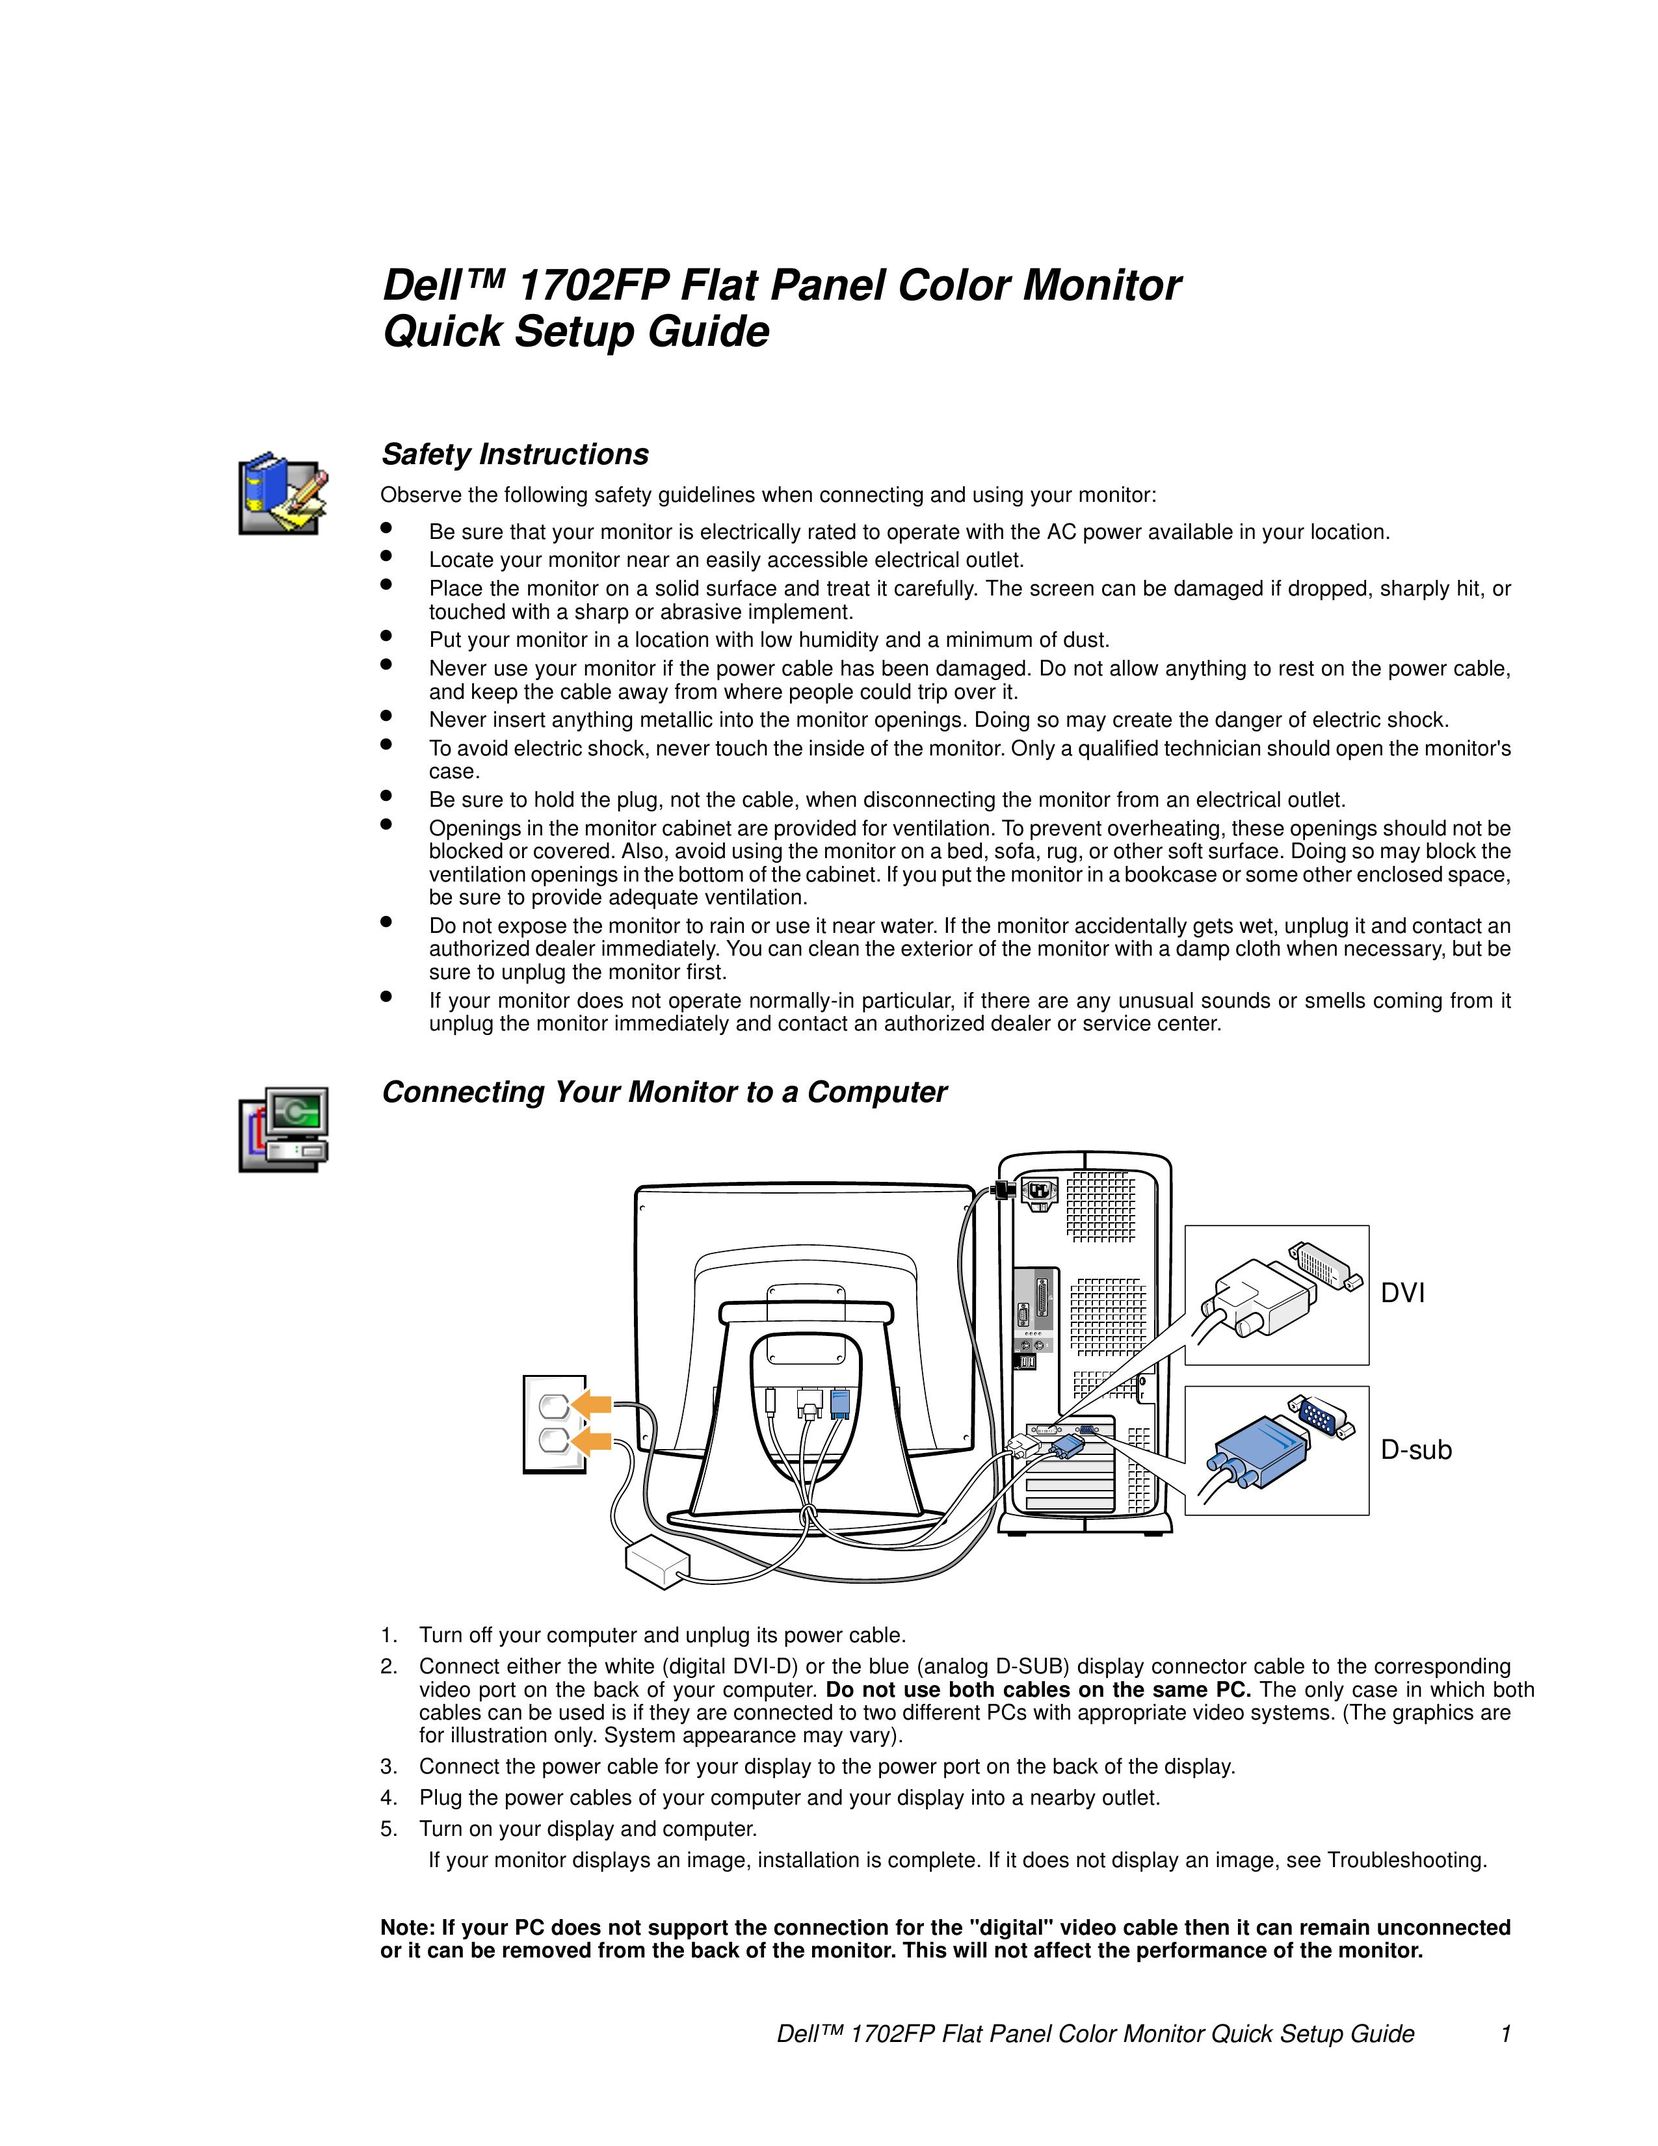 Dell 1702FP Computer Monitor User Manual